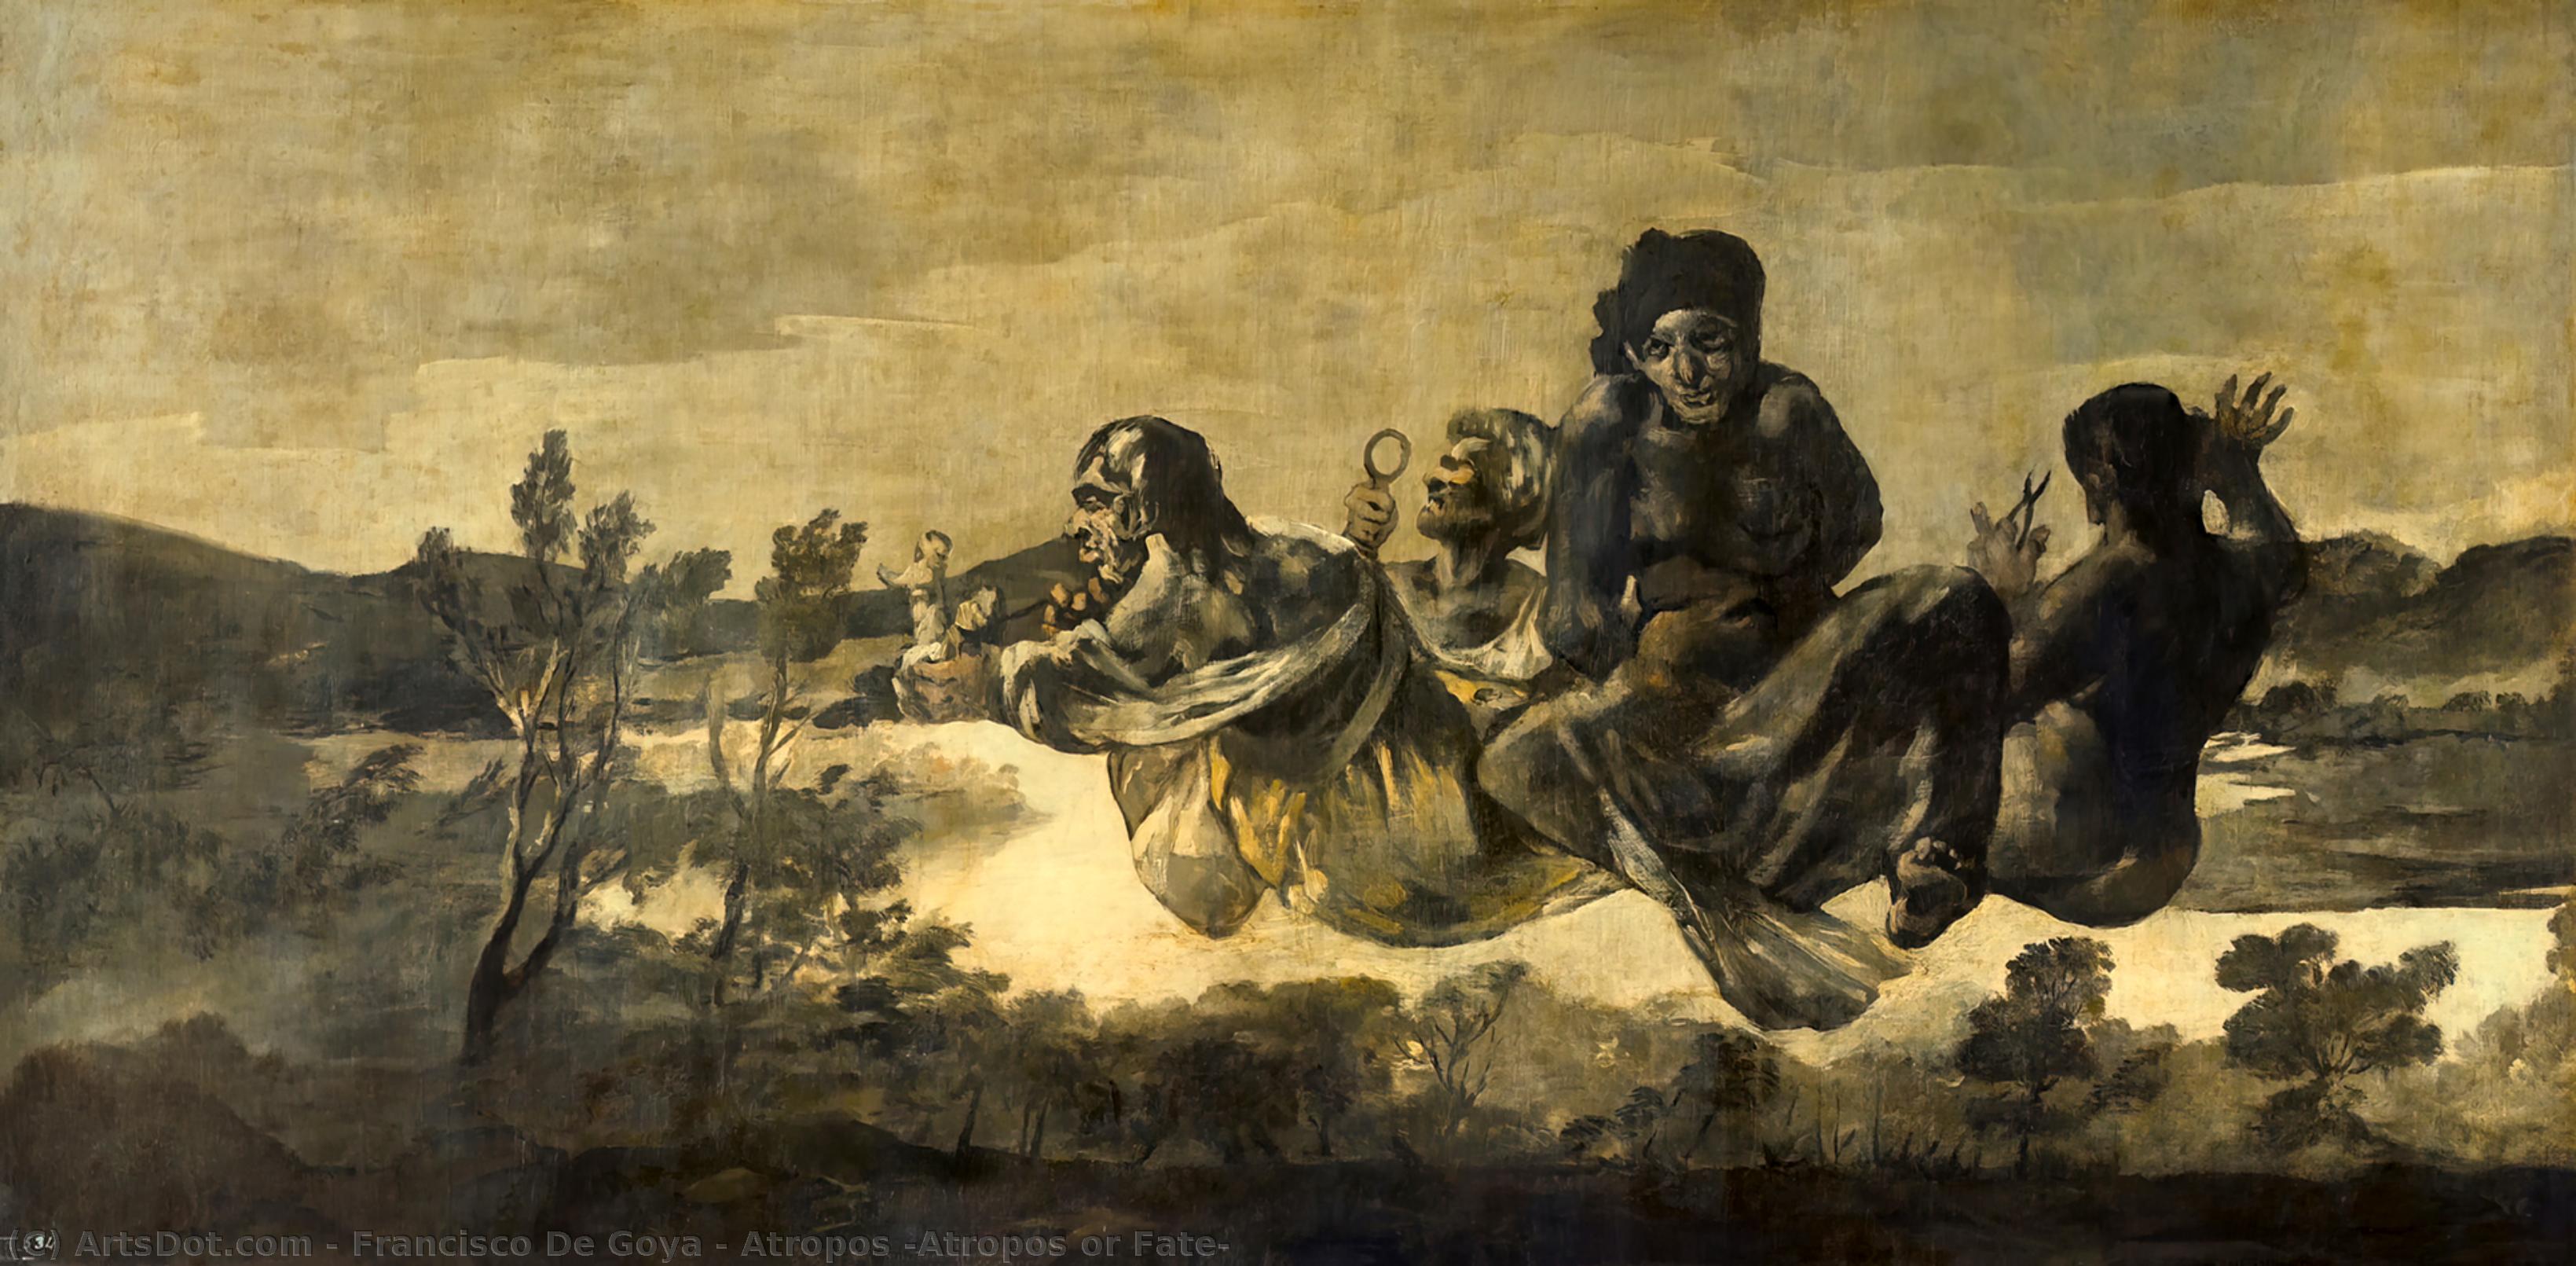 Wikoo.org - موسوعة الفنون الجميلة - اللوحة، العمل الفني Francisco De Goya - Atropos (Atropos or Fate)